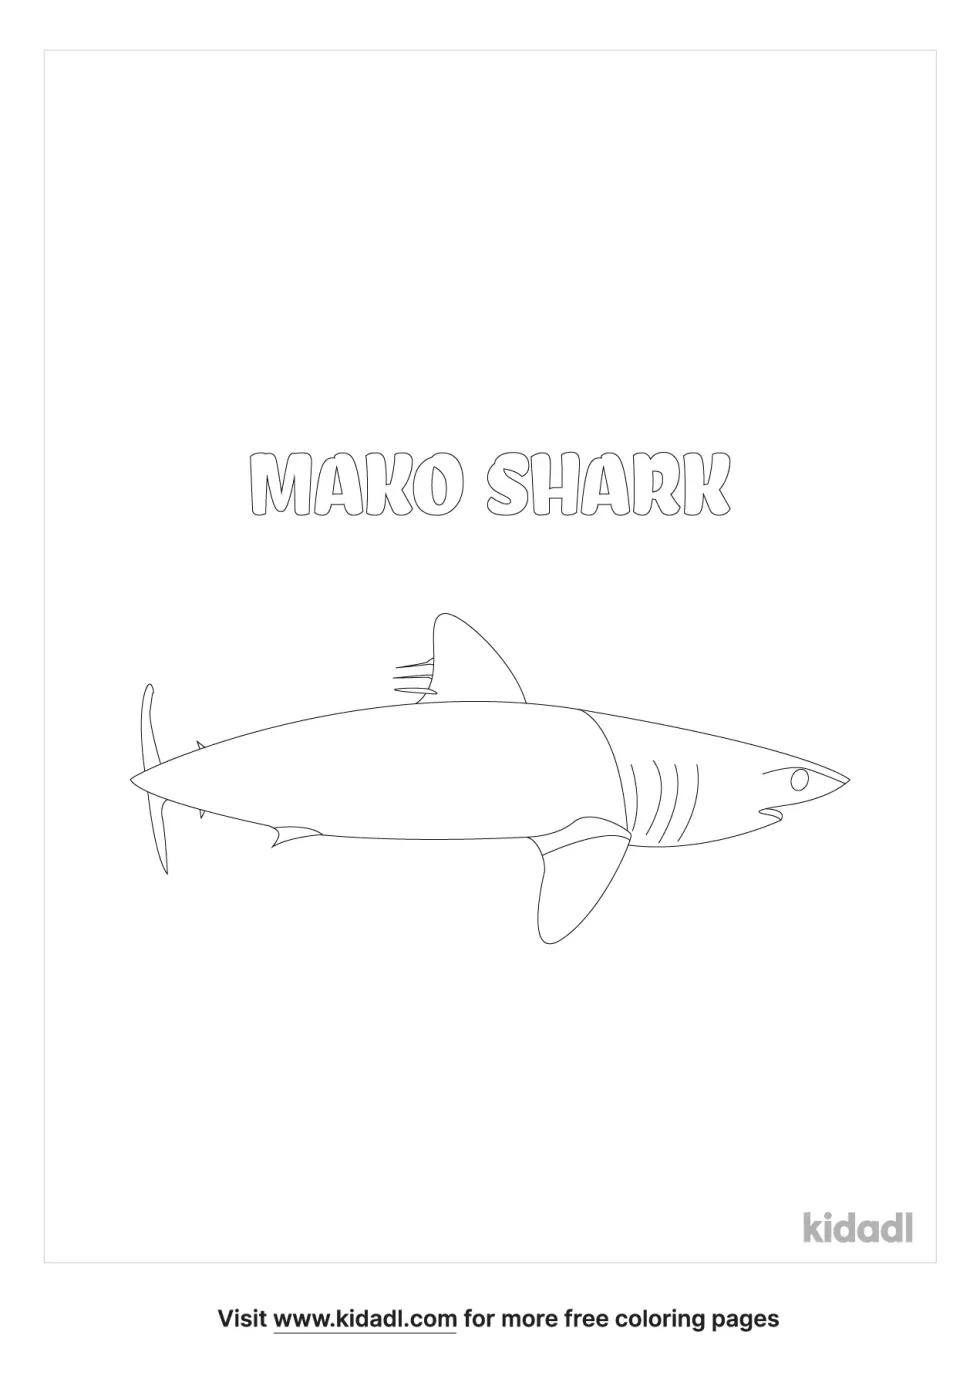 Mako Shark | Kidadl